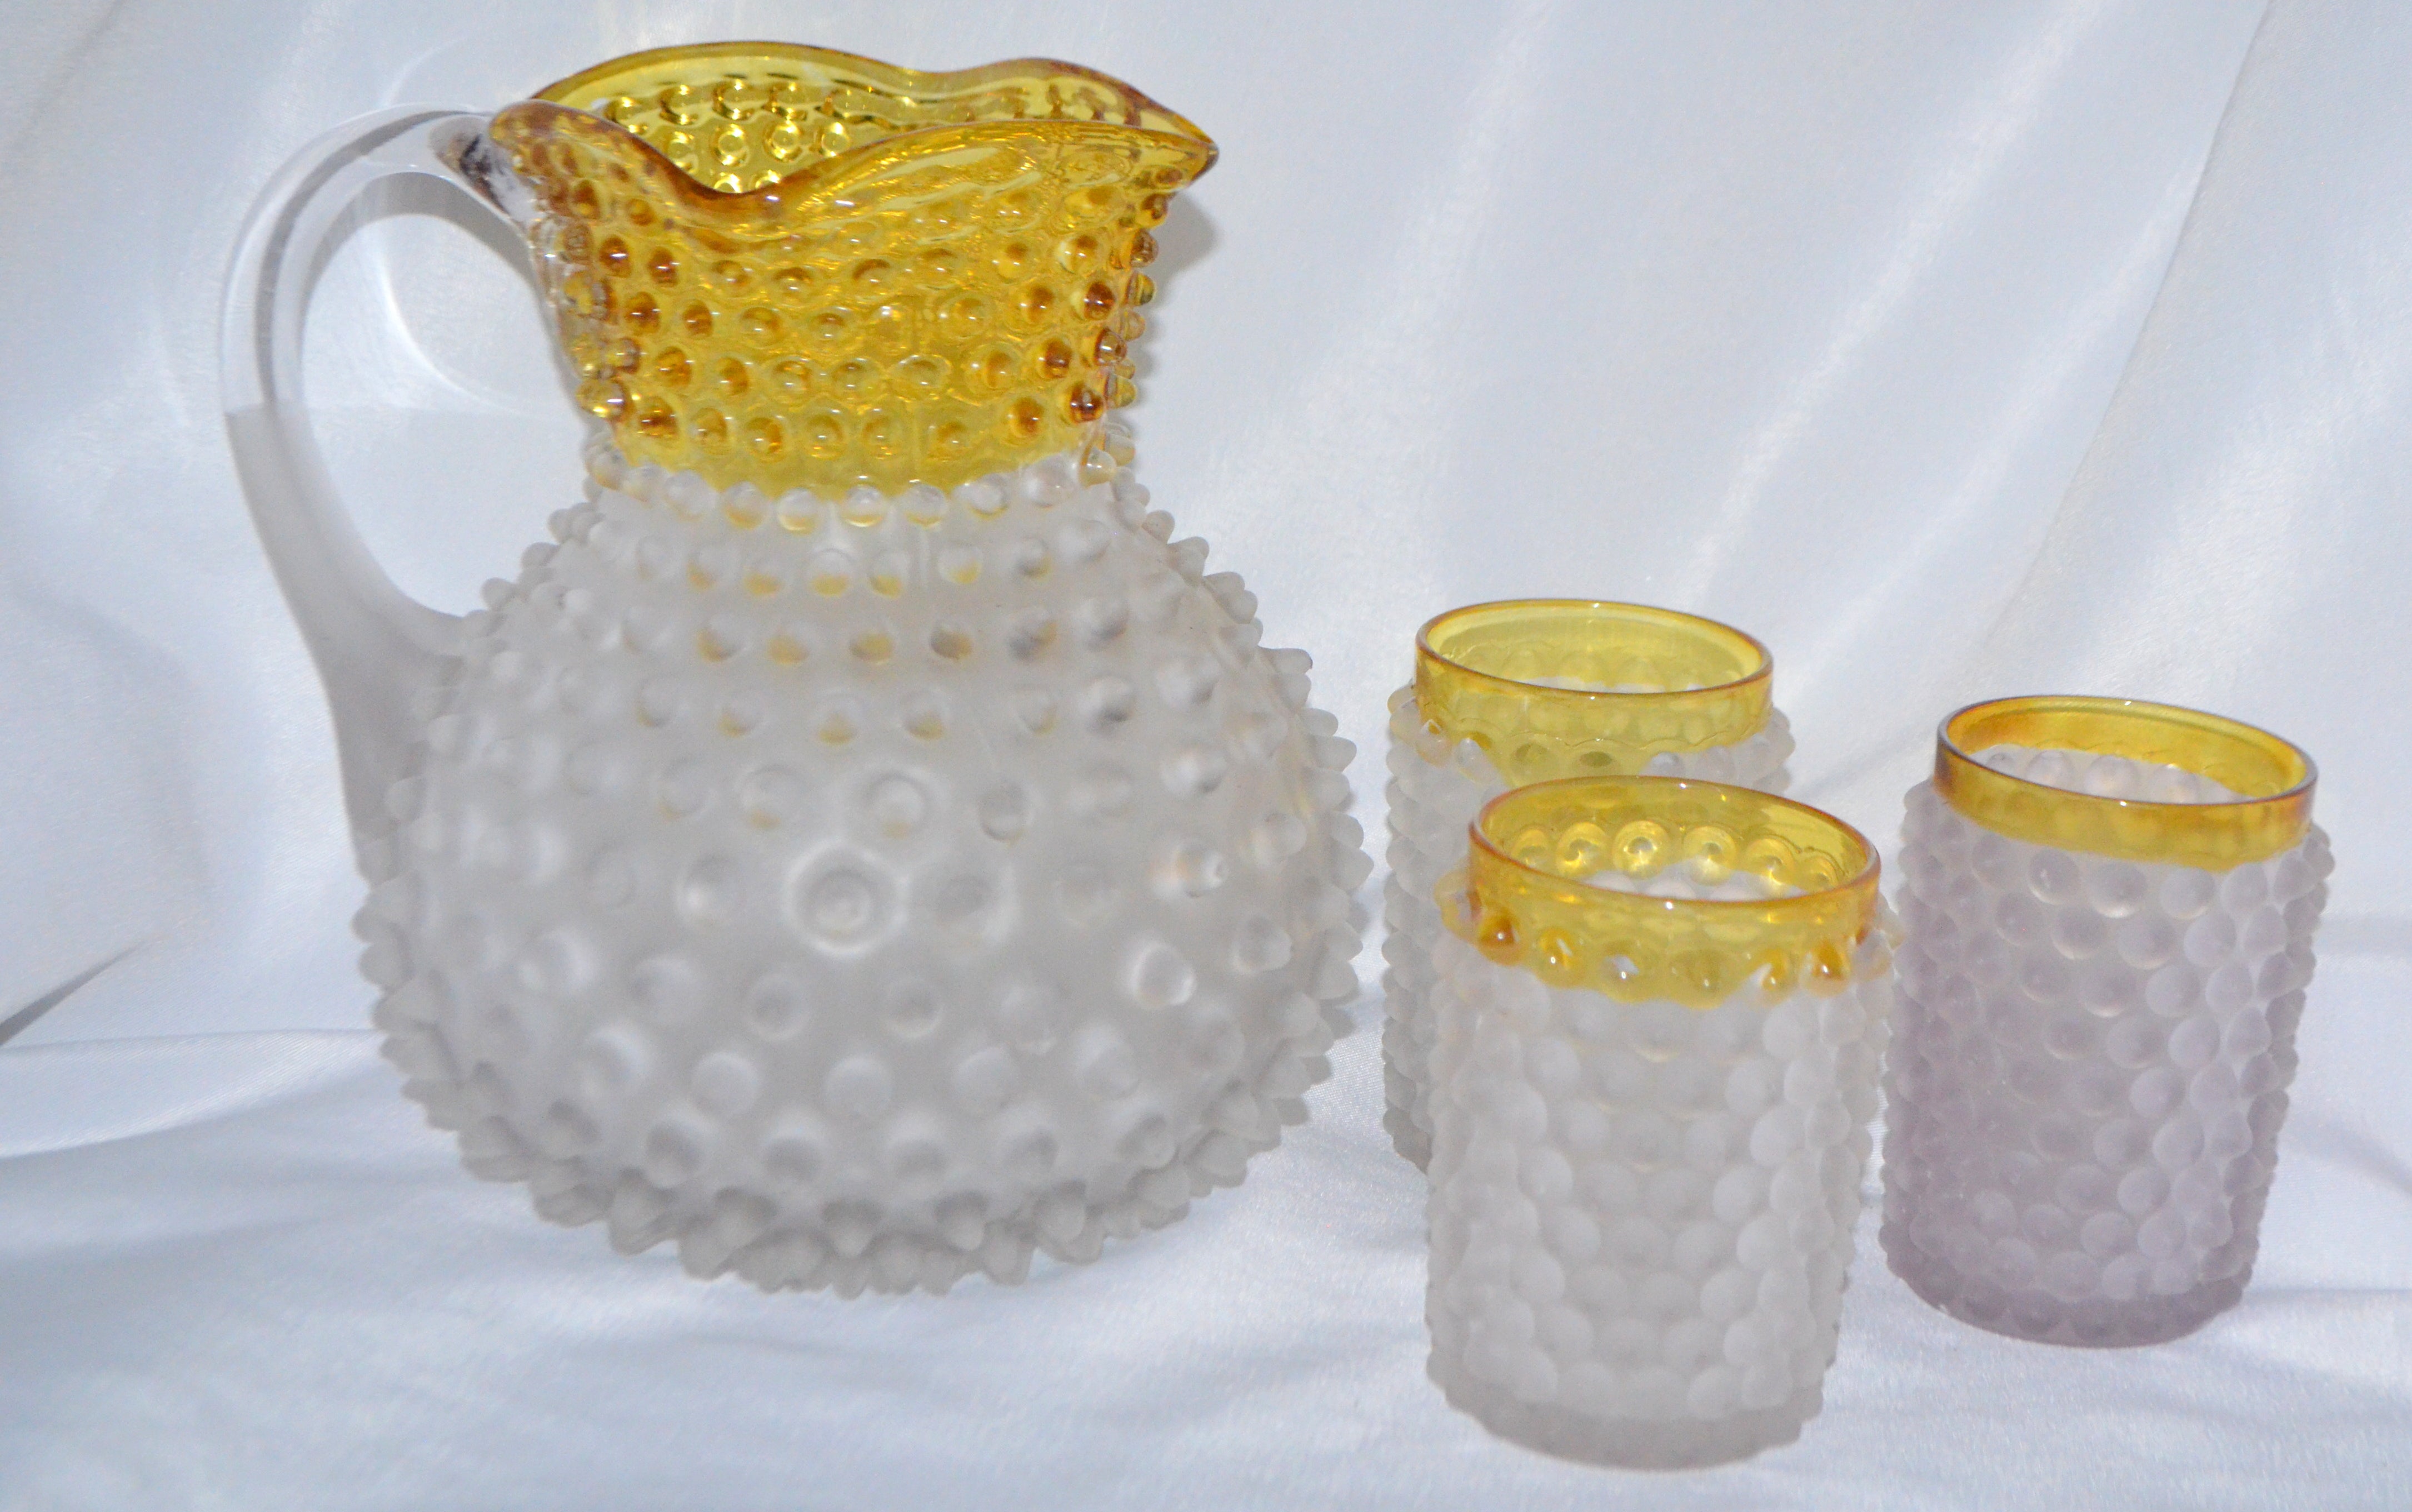 Antique Pattern Glass Pitcher, Water Pitcher, Lemonade Pitcher